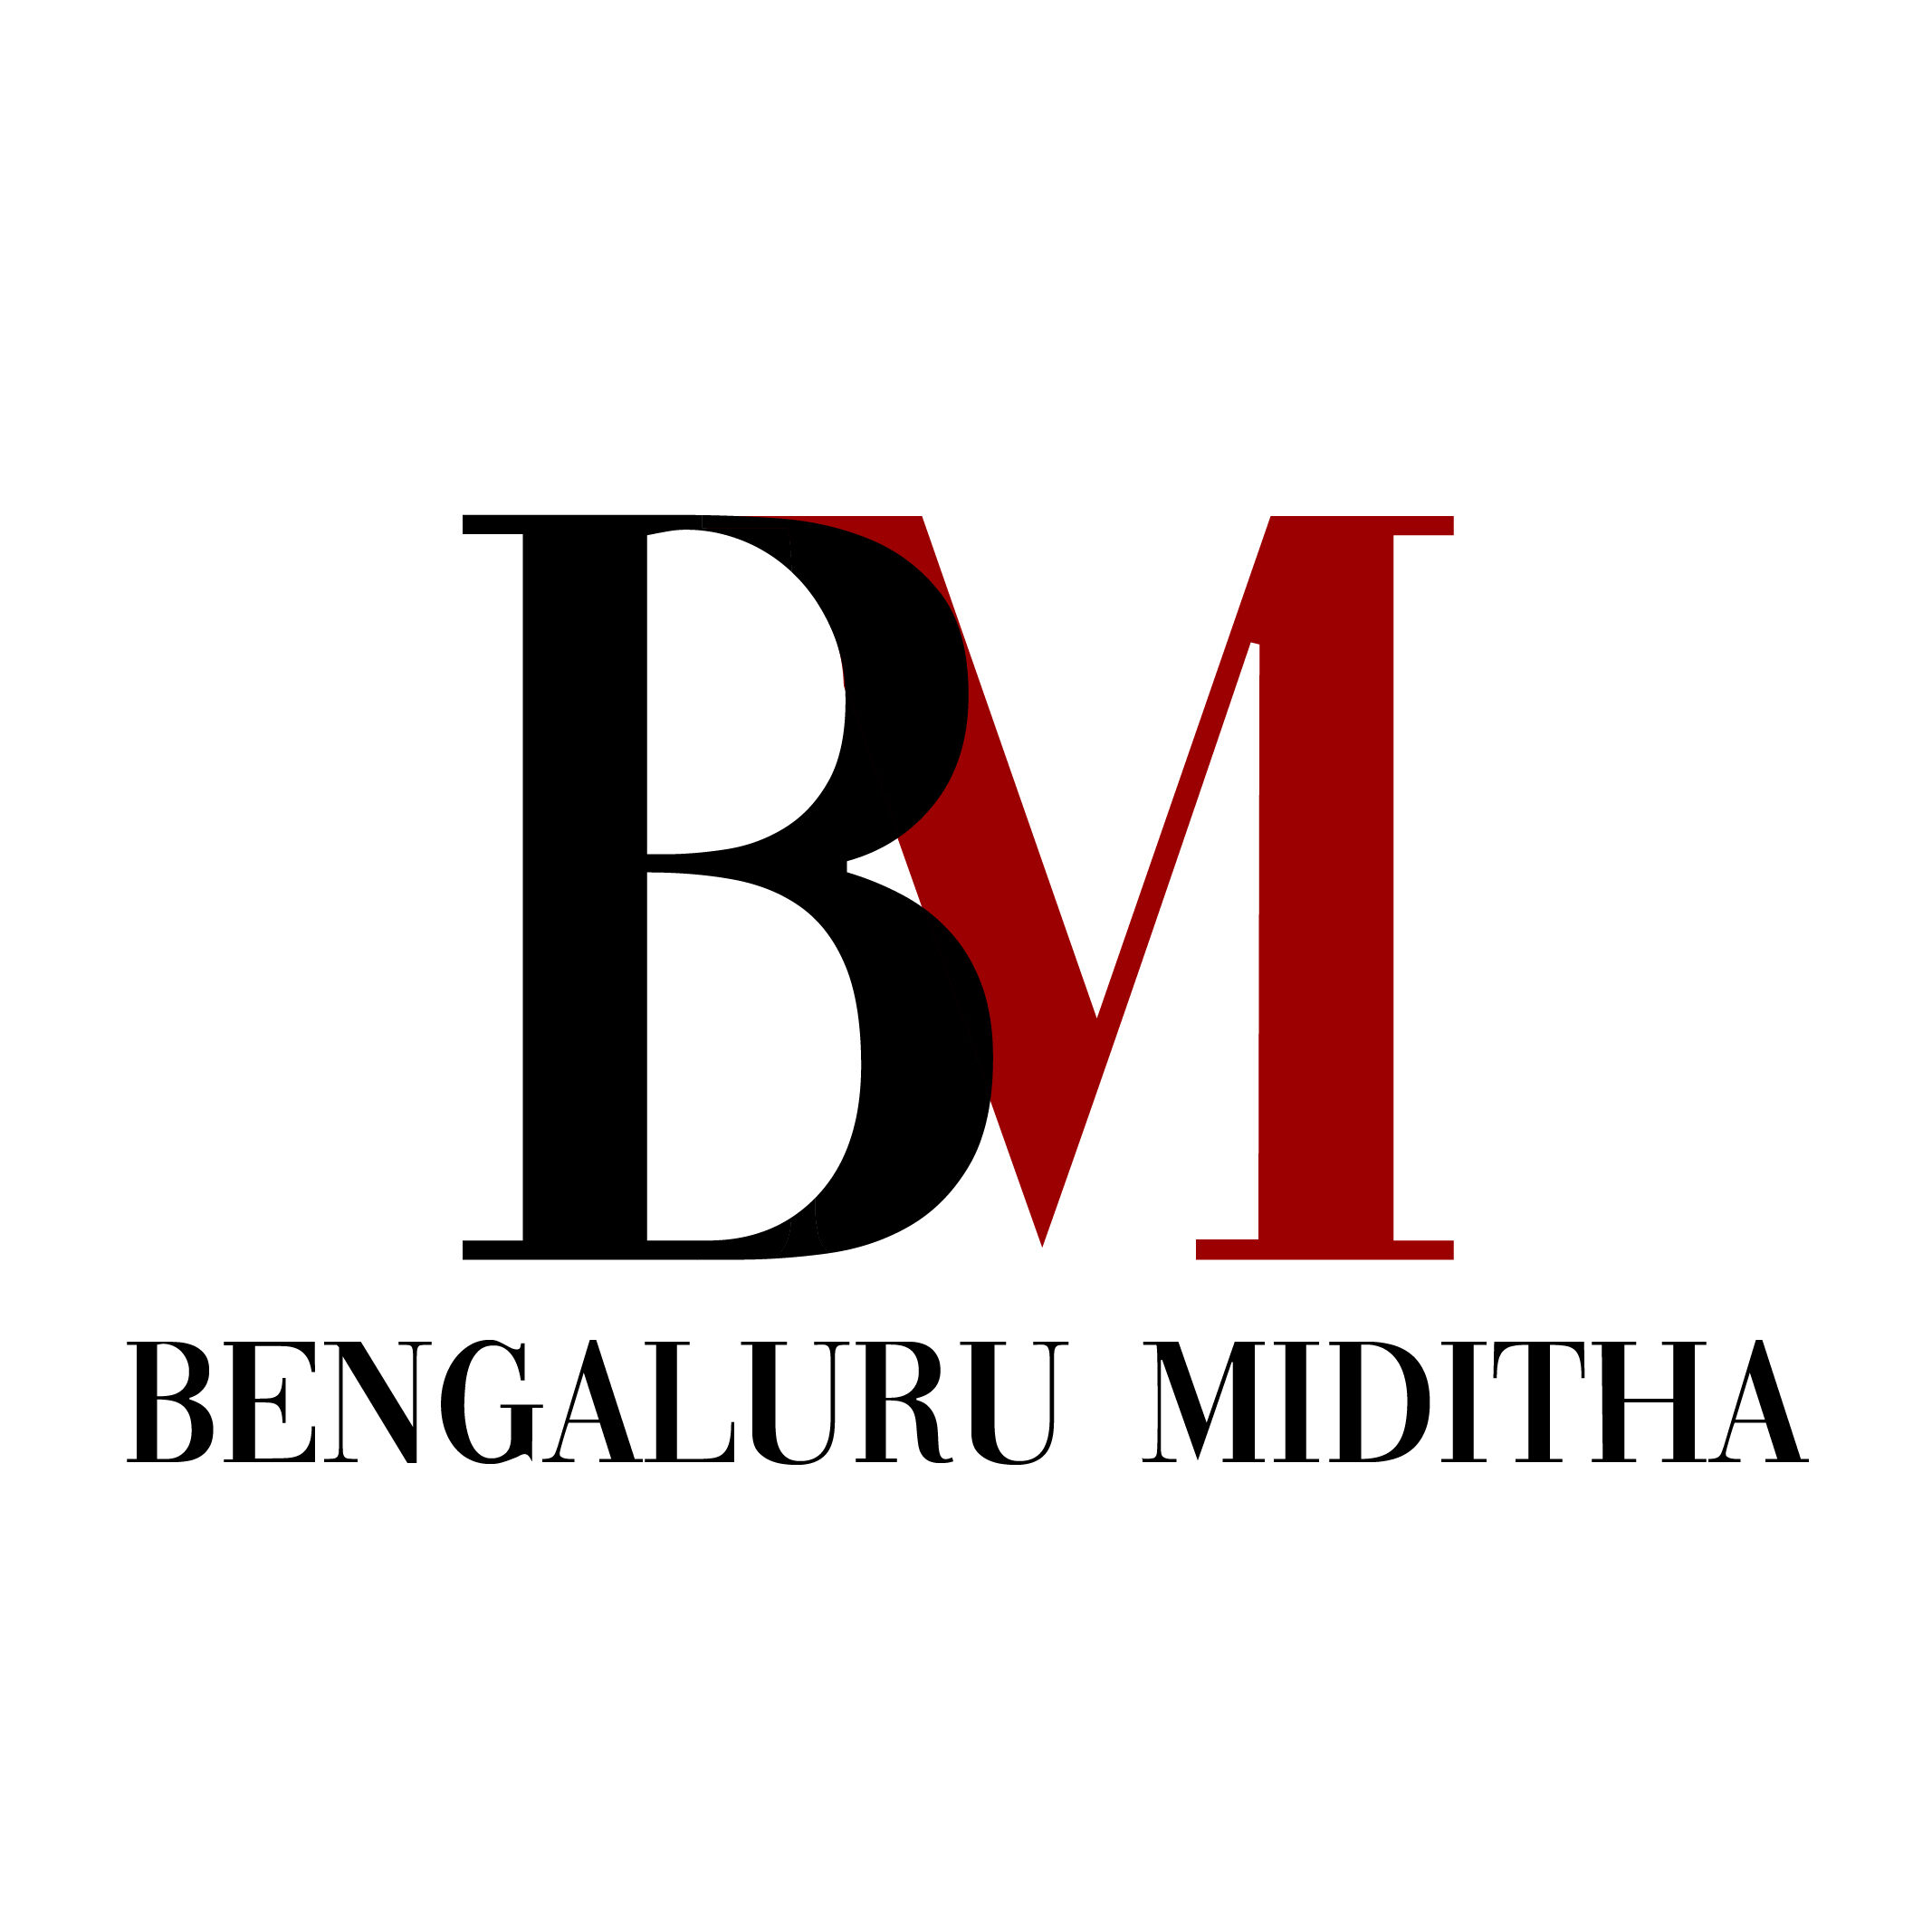 Bengalurumiditha